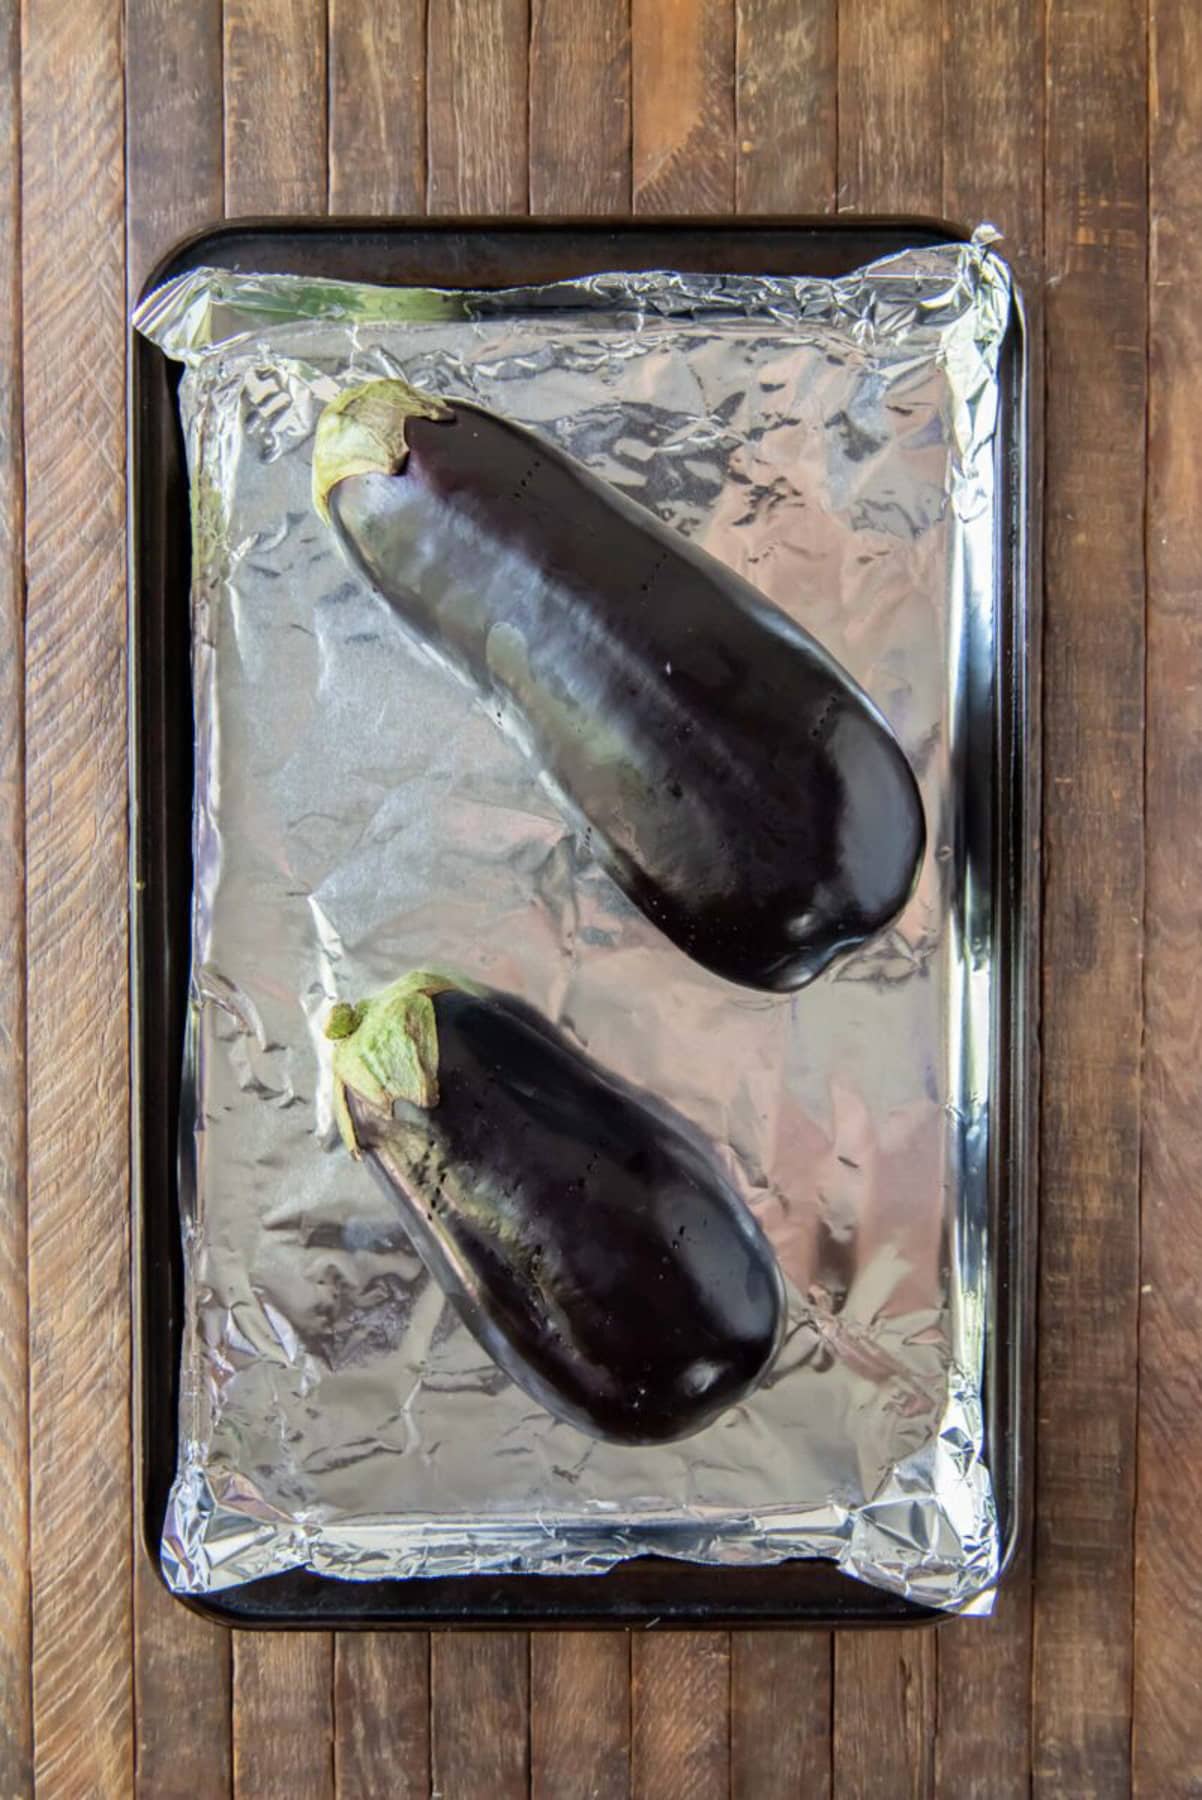 Eggplants prepped on a baking sheet before baking.